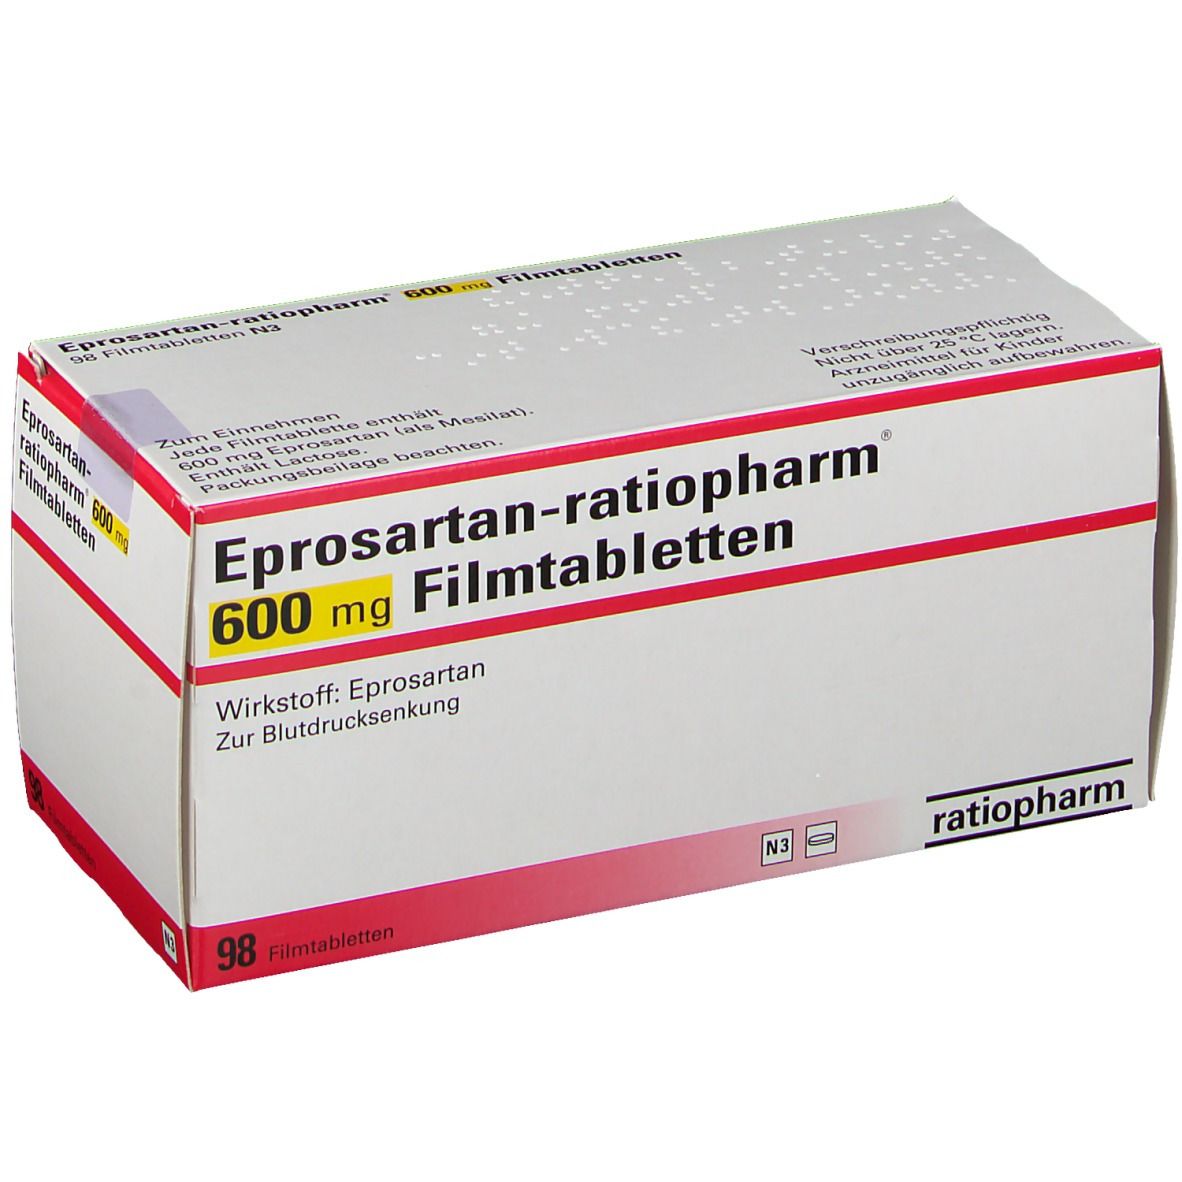 Eprosartan-ratiopharm® 600 mg